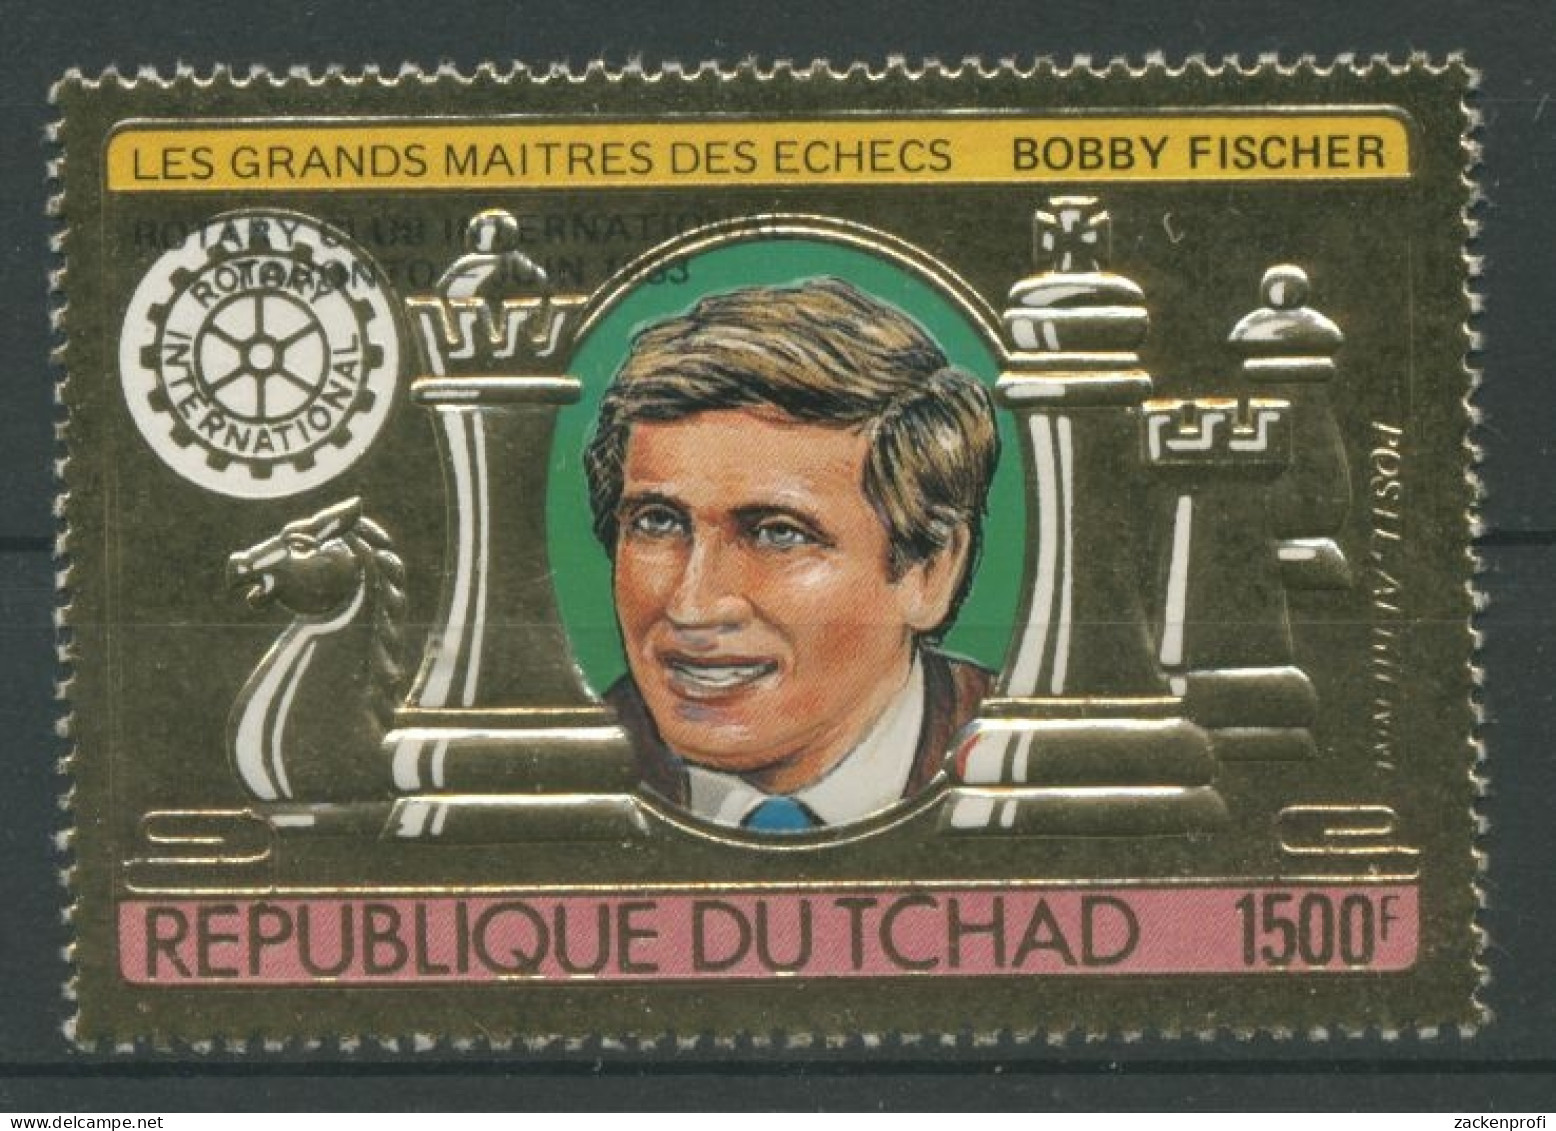 Tschad 1982 Schachgroßmeister Bobby Fischer 951 A Postfrisch - Tschad (1960-...)